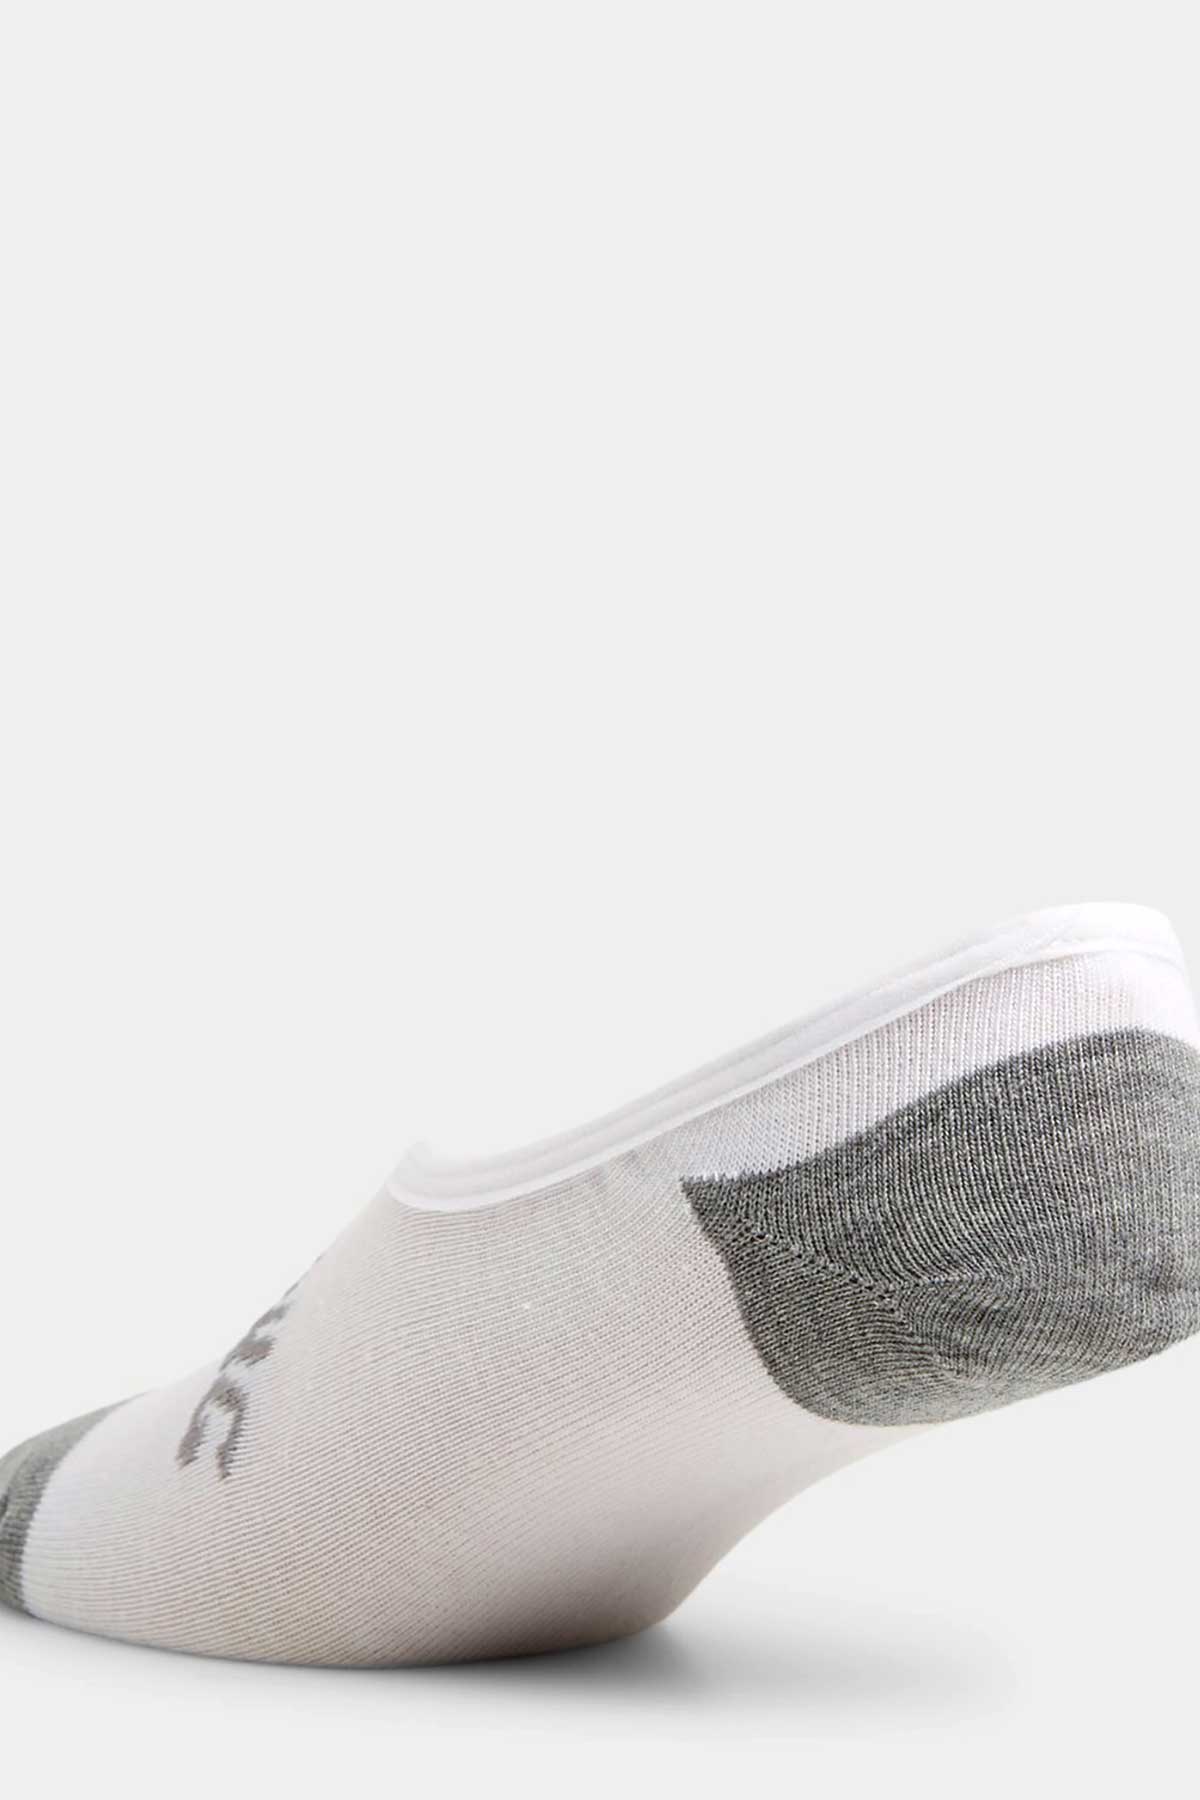 Billabong Invisible Socks 5 Pack, Back View White and Grey.